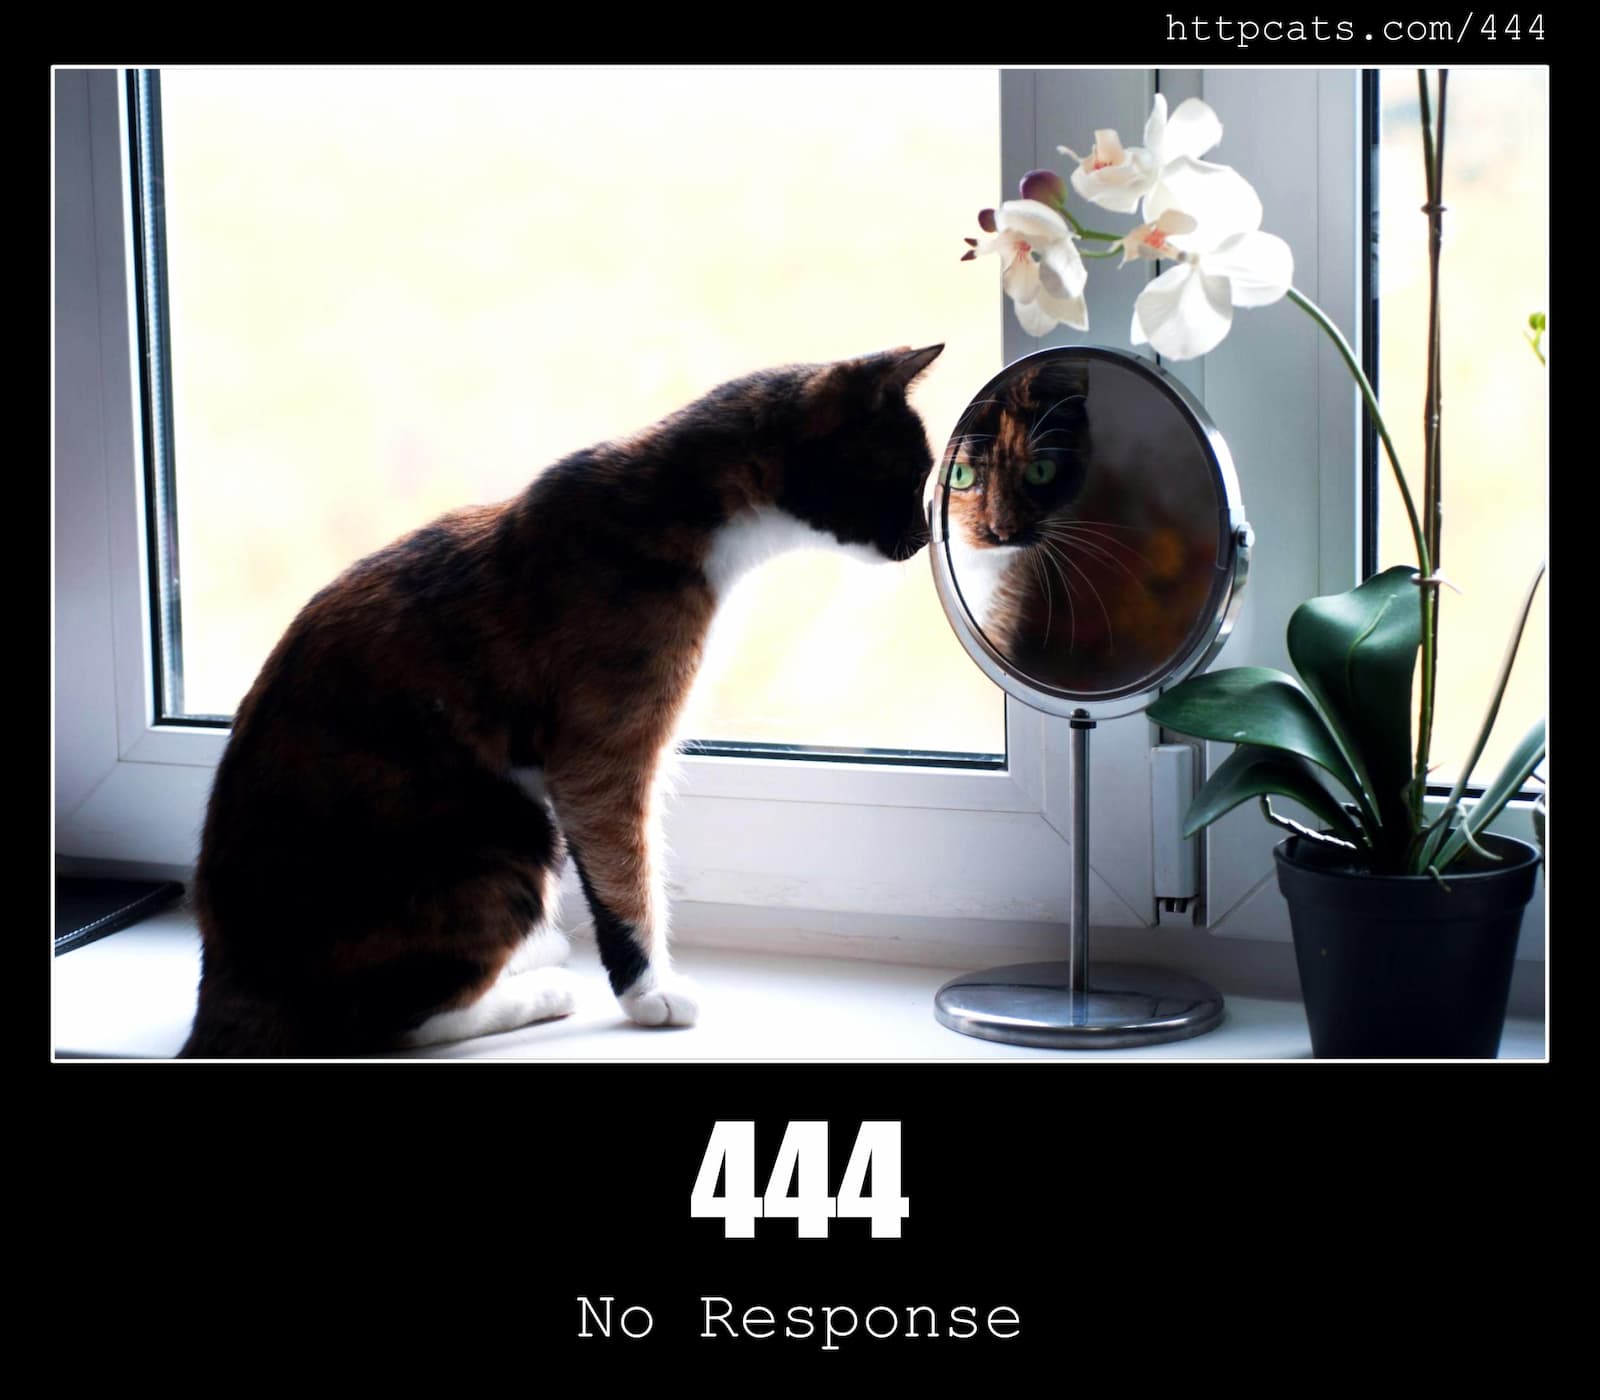 HTTP Status Code 444 No Response & Cats